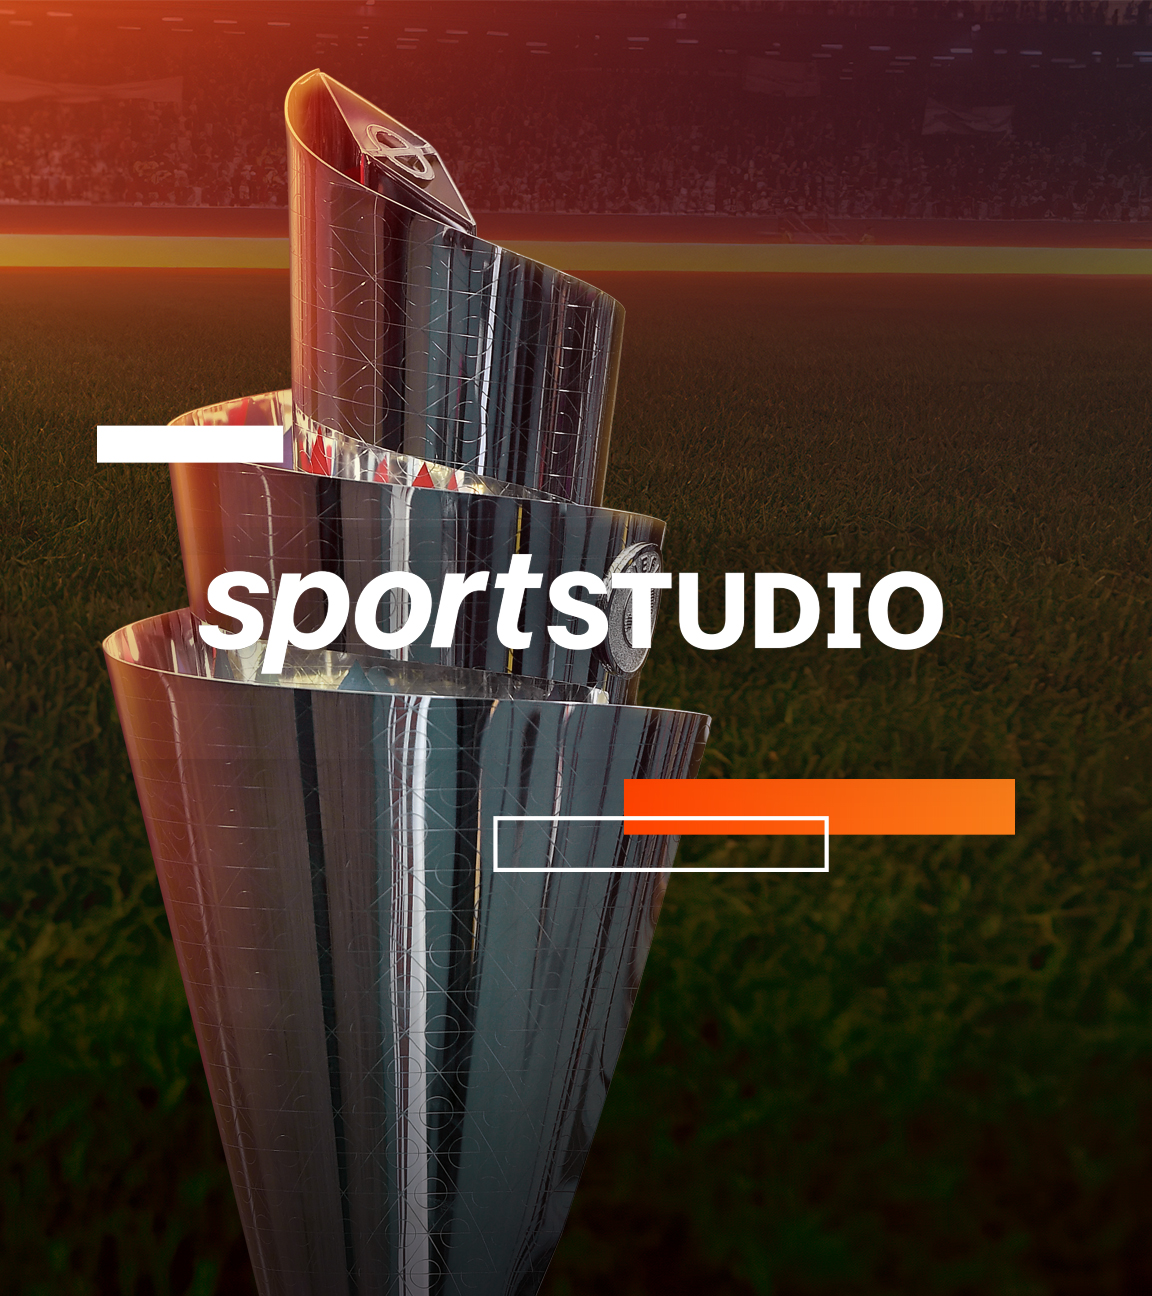 Sportstudio: UEFA Nations League